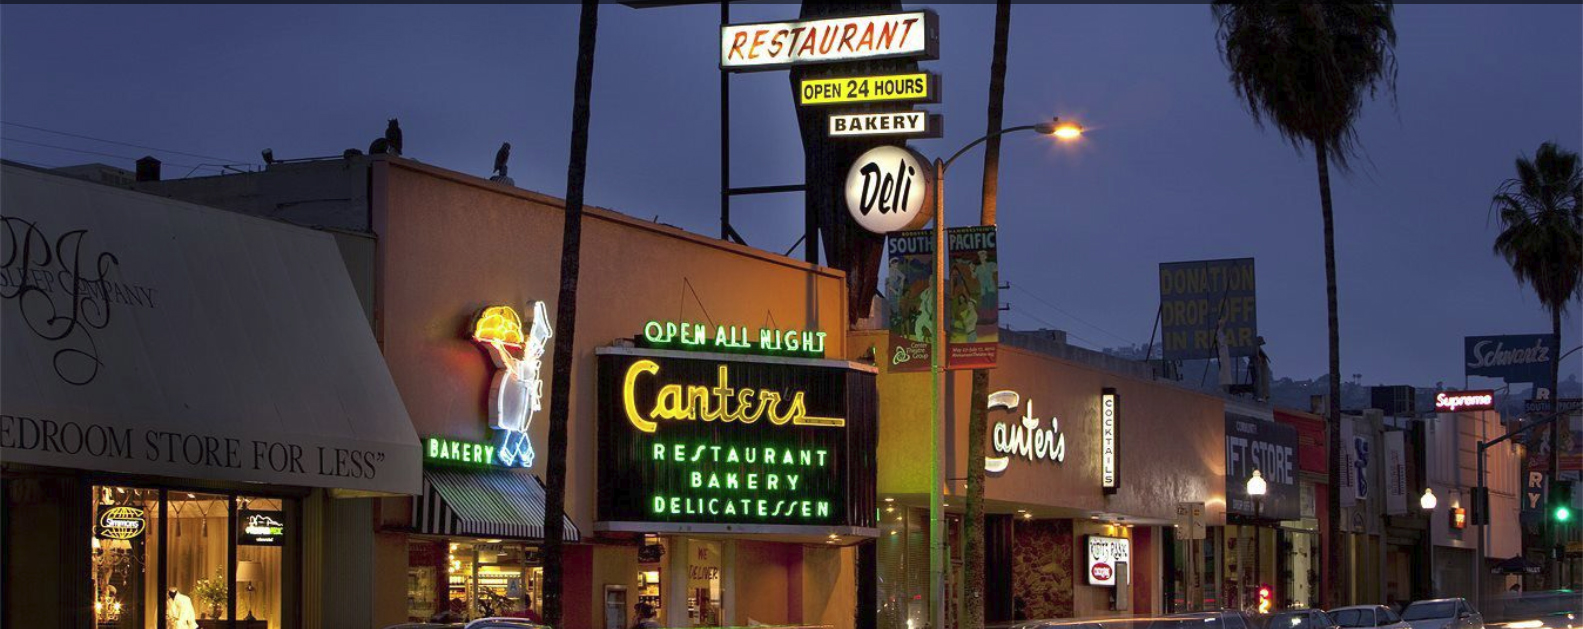 Canter's Deli and Restaurant